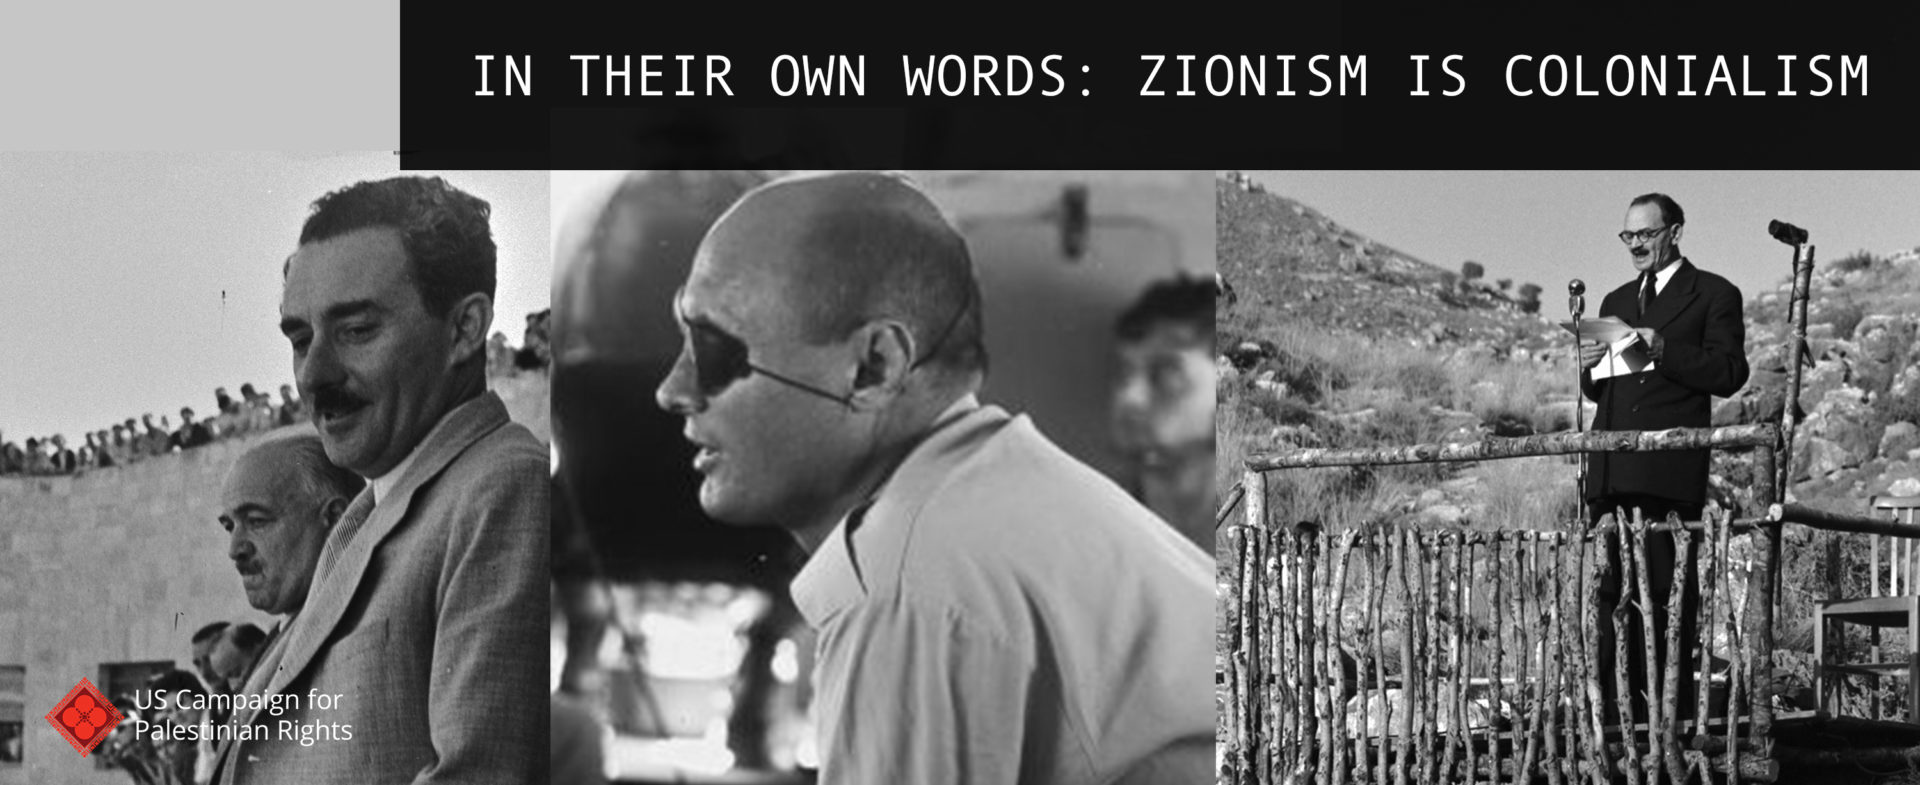 Zionismcolonialism-eblast